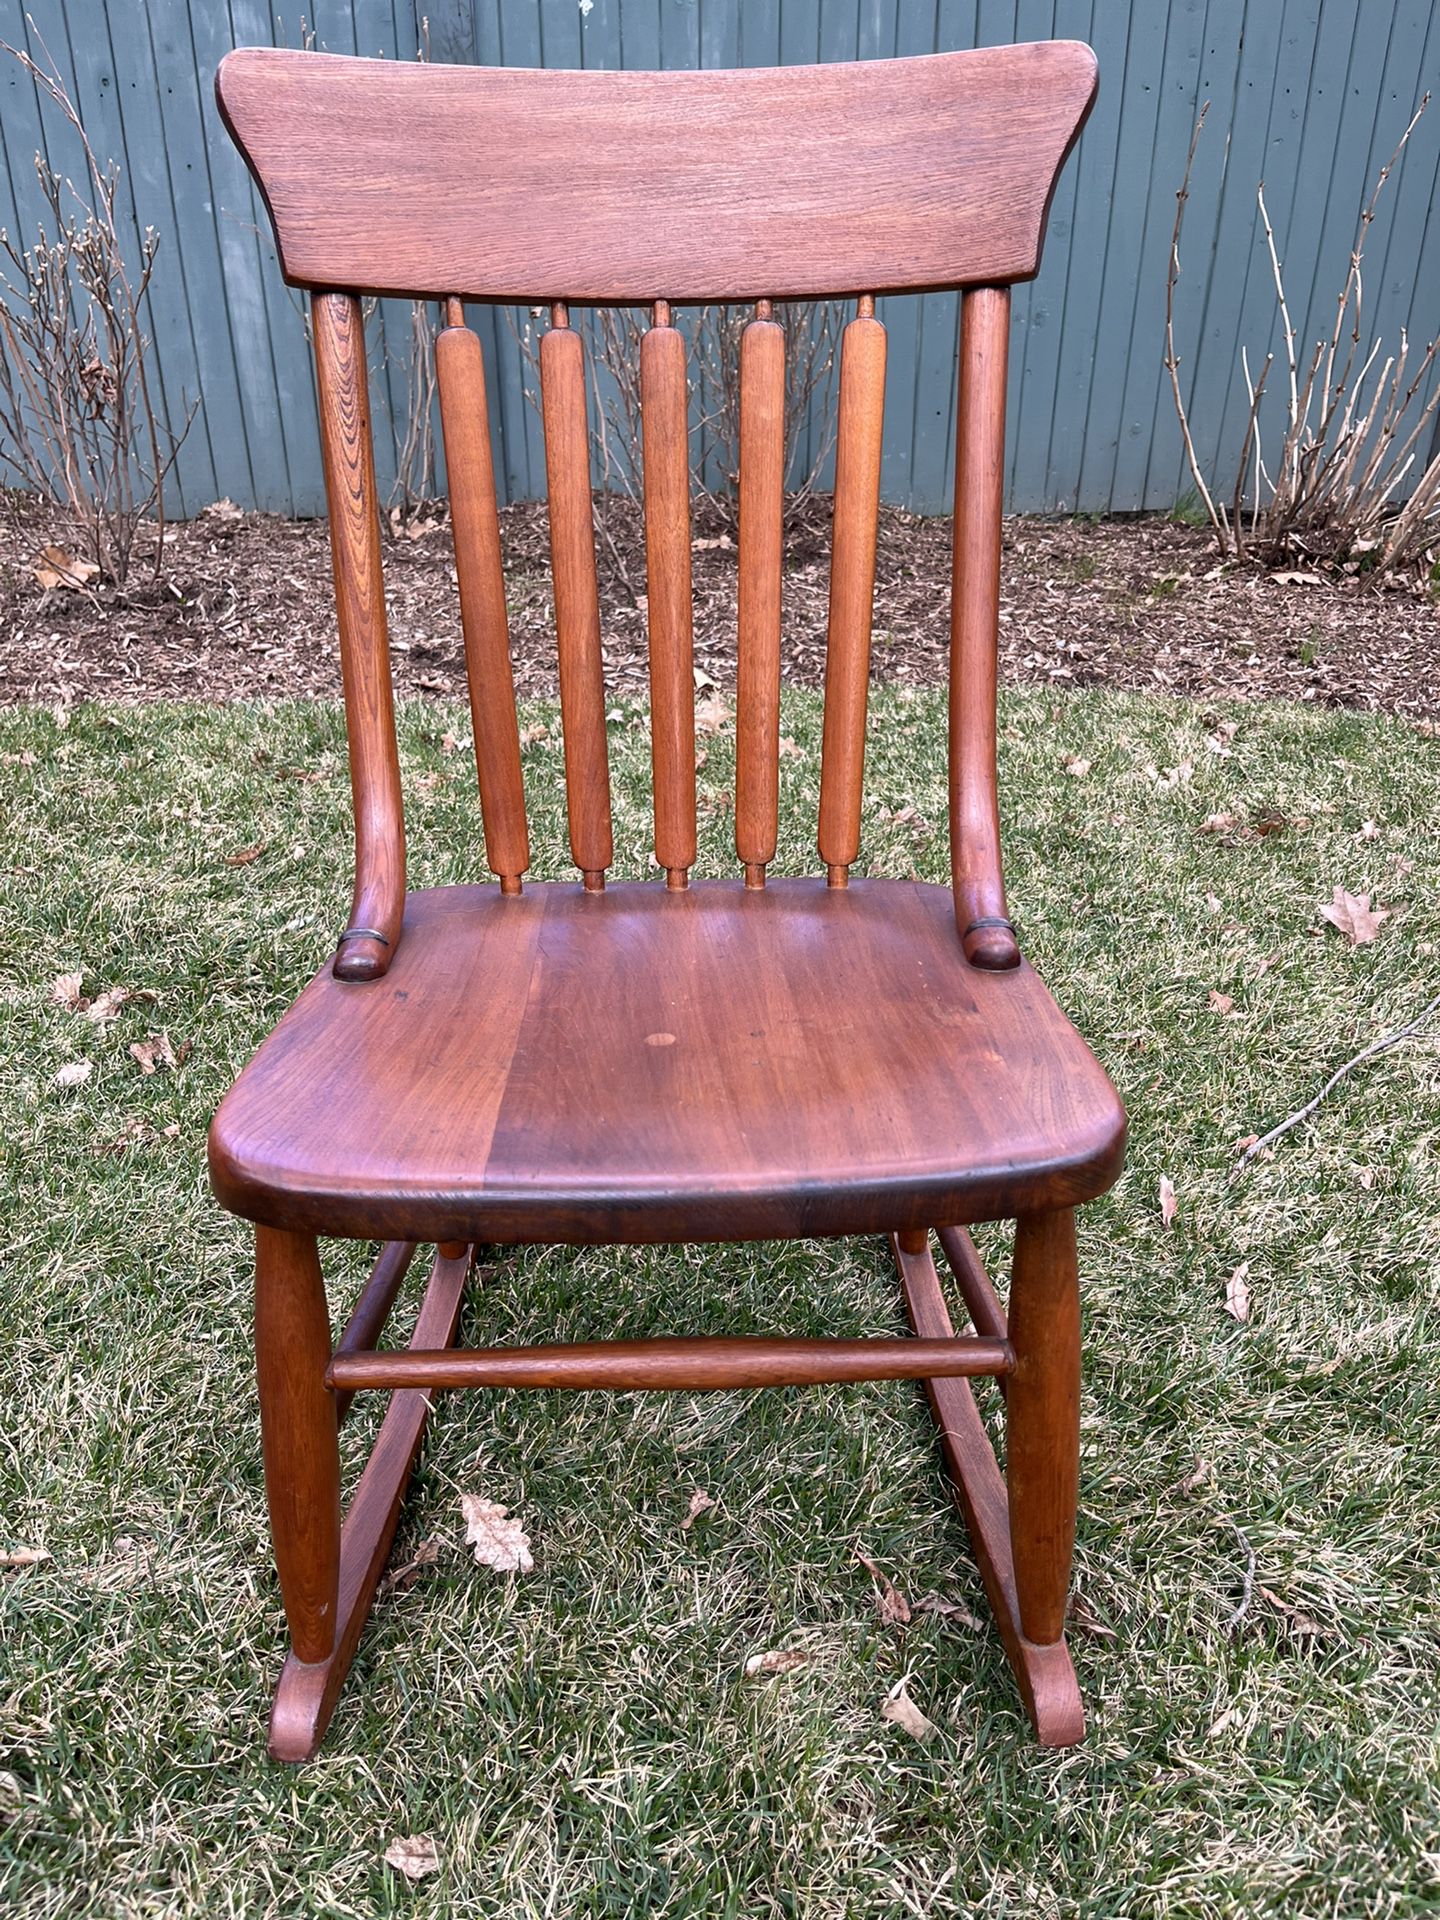 Geo. Spratt & Co. Child’s solid wood rocking chair 